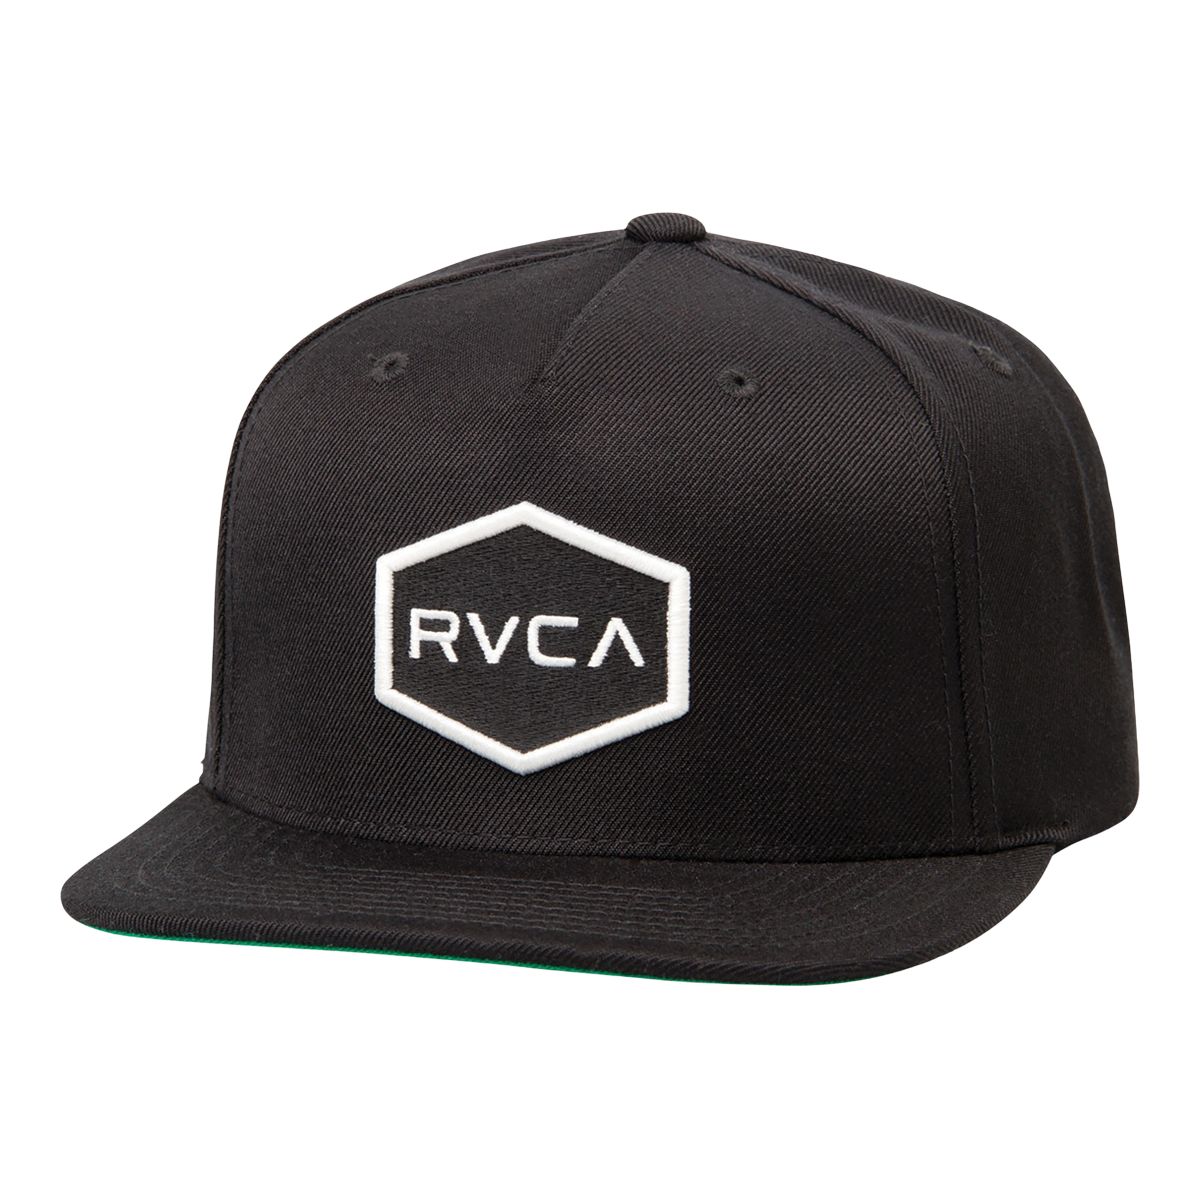 Image of Rvca Men's Commonwealth Snapback Hat